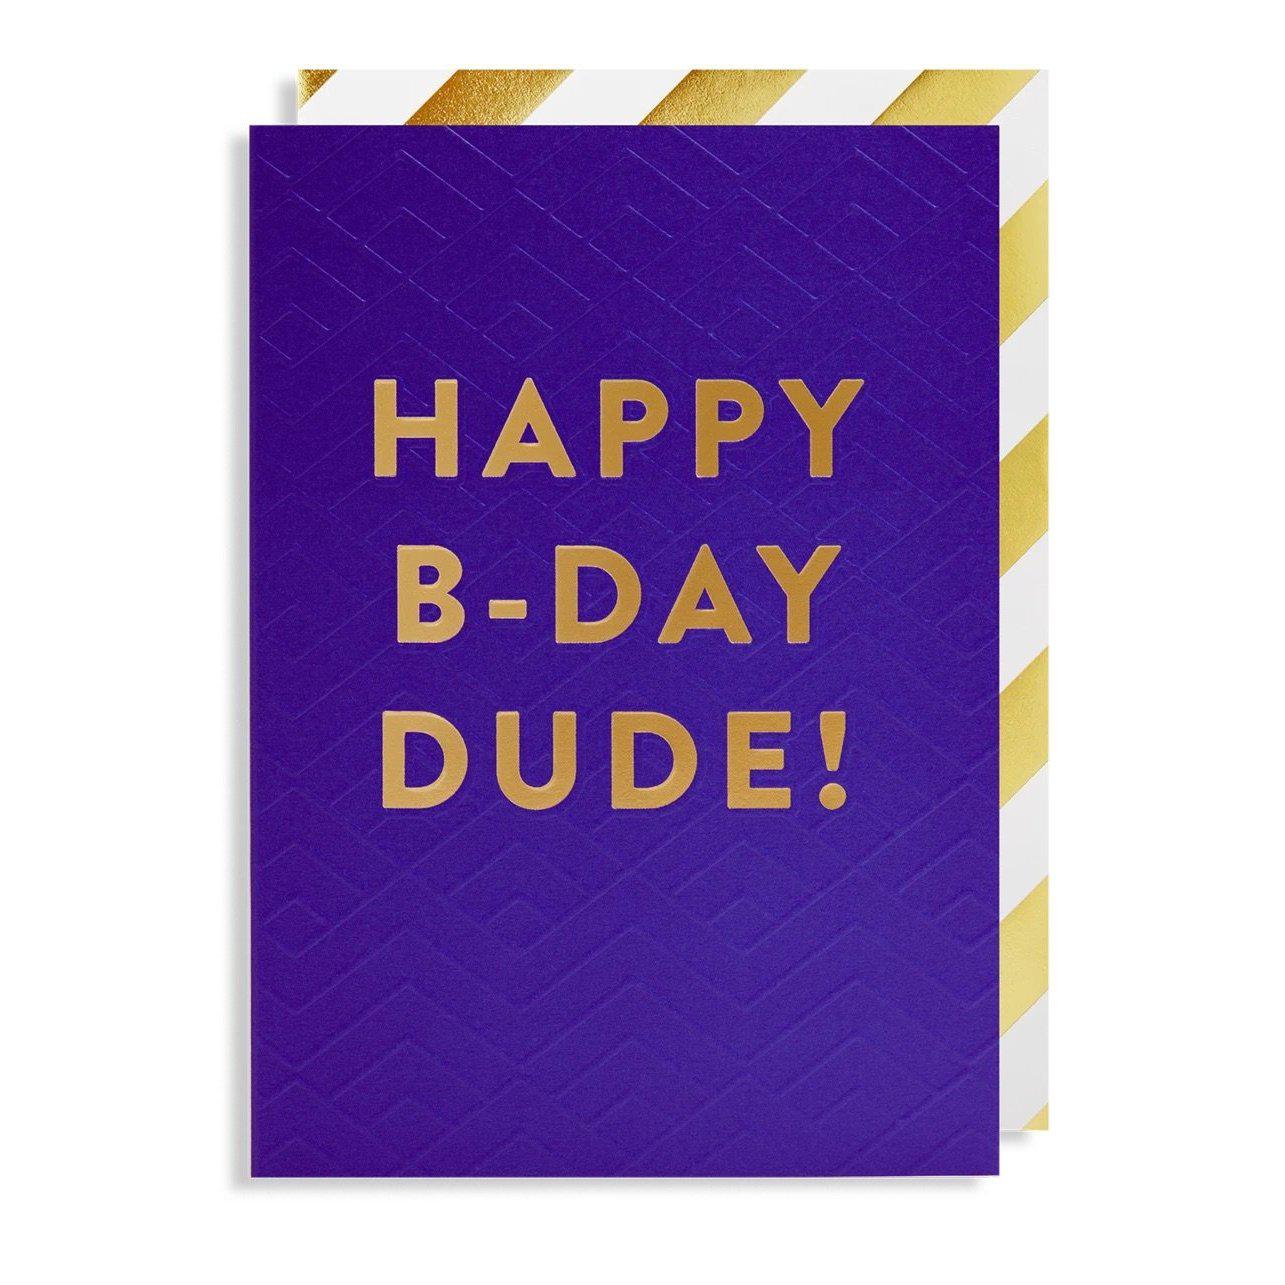 Postco “Happy B-day Dude!” Greeting Card-Breda's Gift Shop